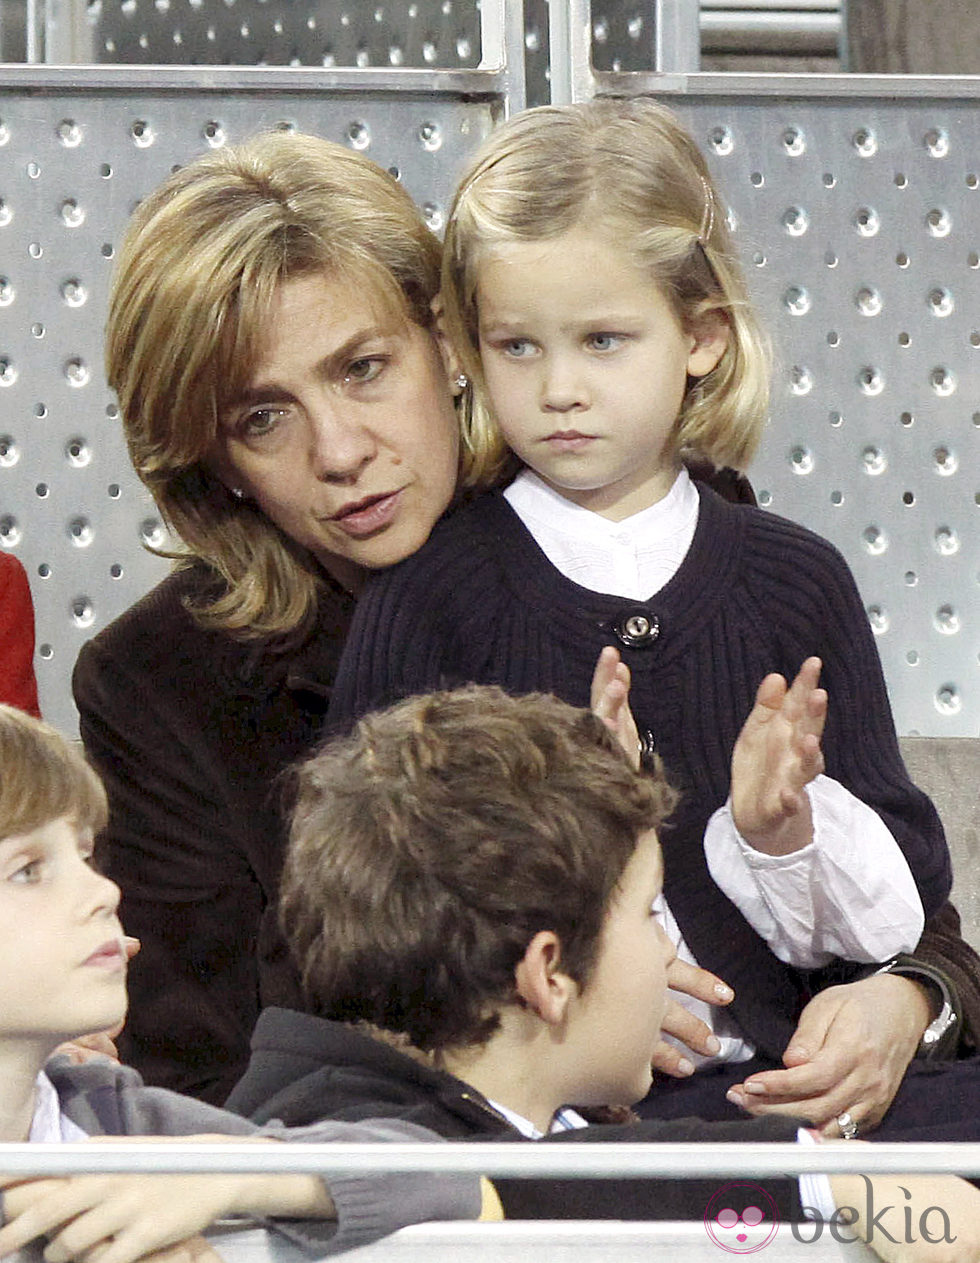 La Infanta Cristina e Irene Urdangarín en 2010